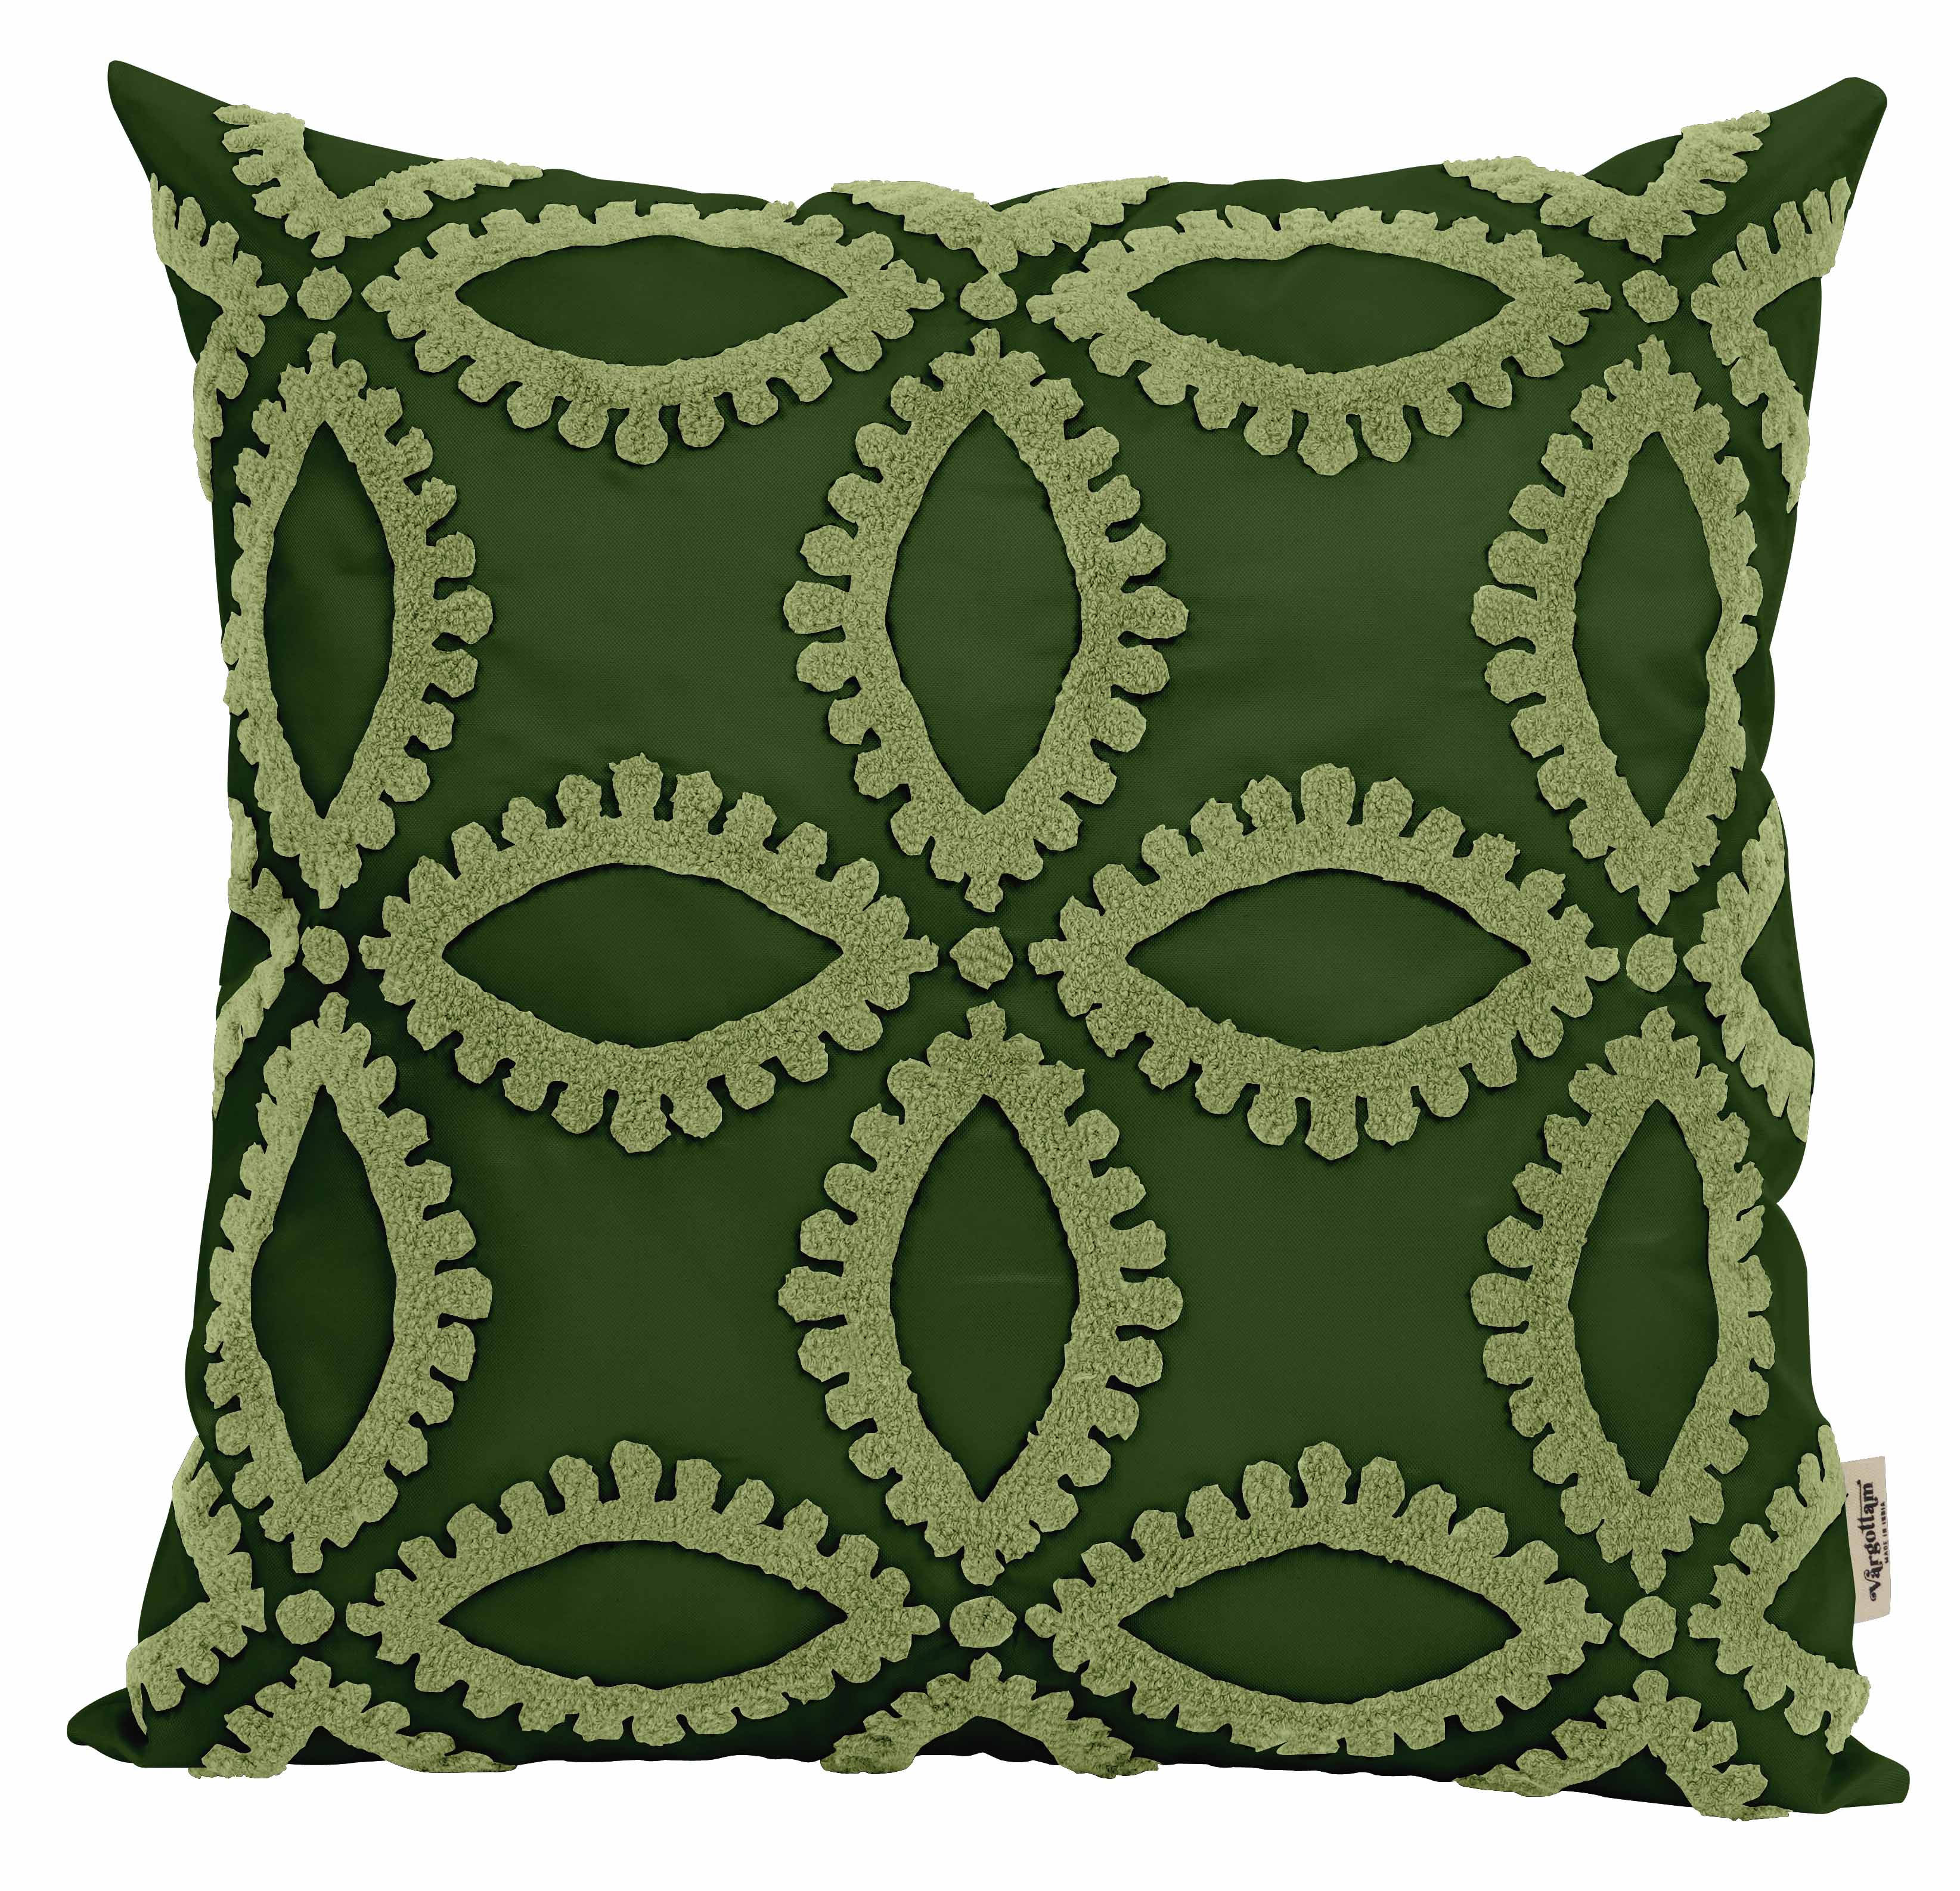 Vargottam Outdoor Decorative Throw Pillow CoversTowelEmbroideredPolyester Handmade Boho Cushion CoversFor Outdoor Patio -Asian - Dark Green - image 1 of 6